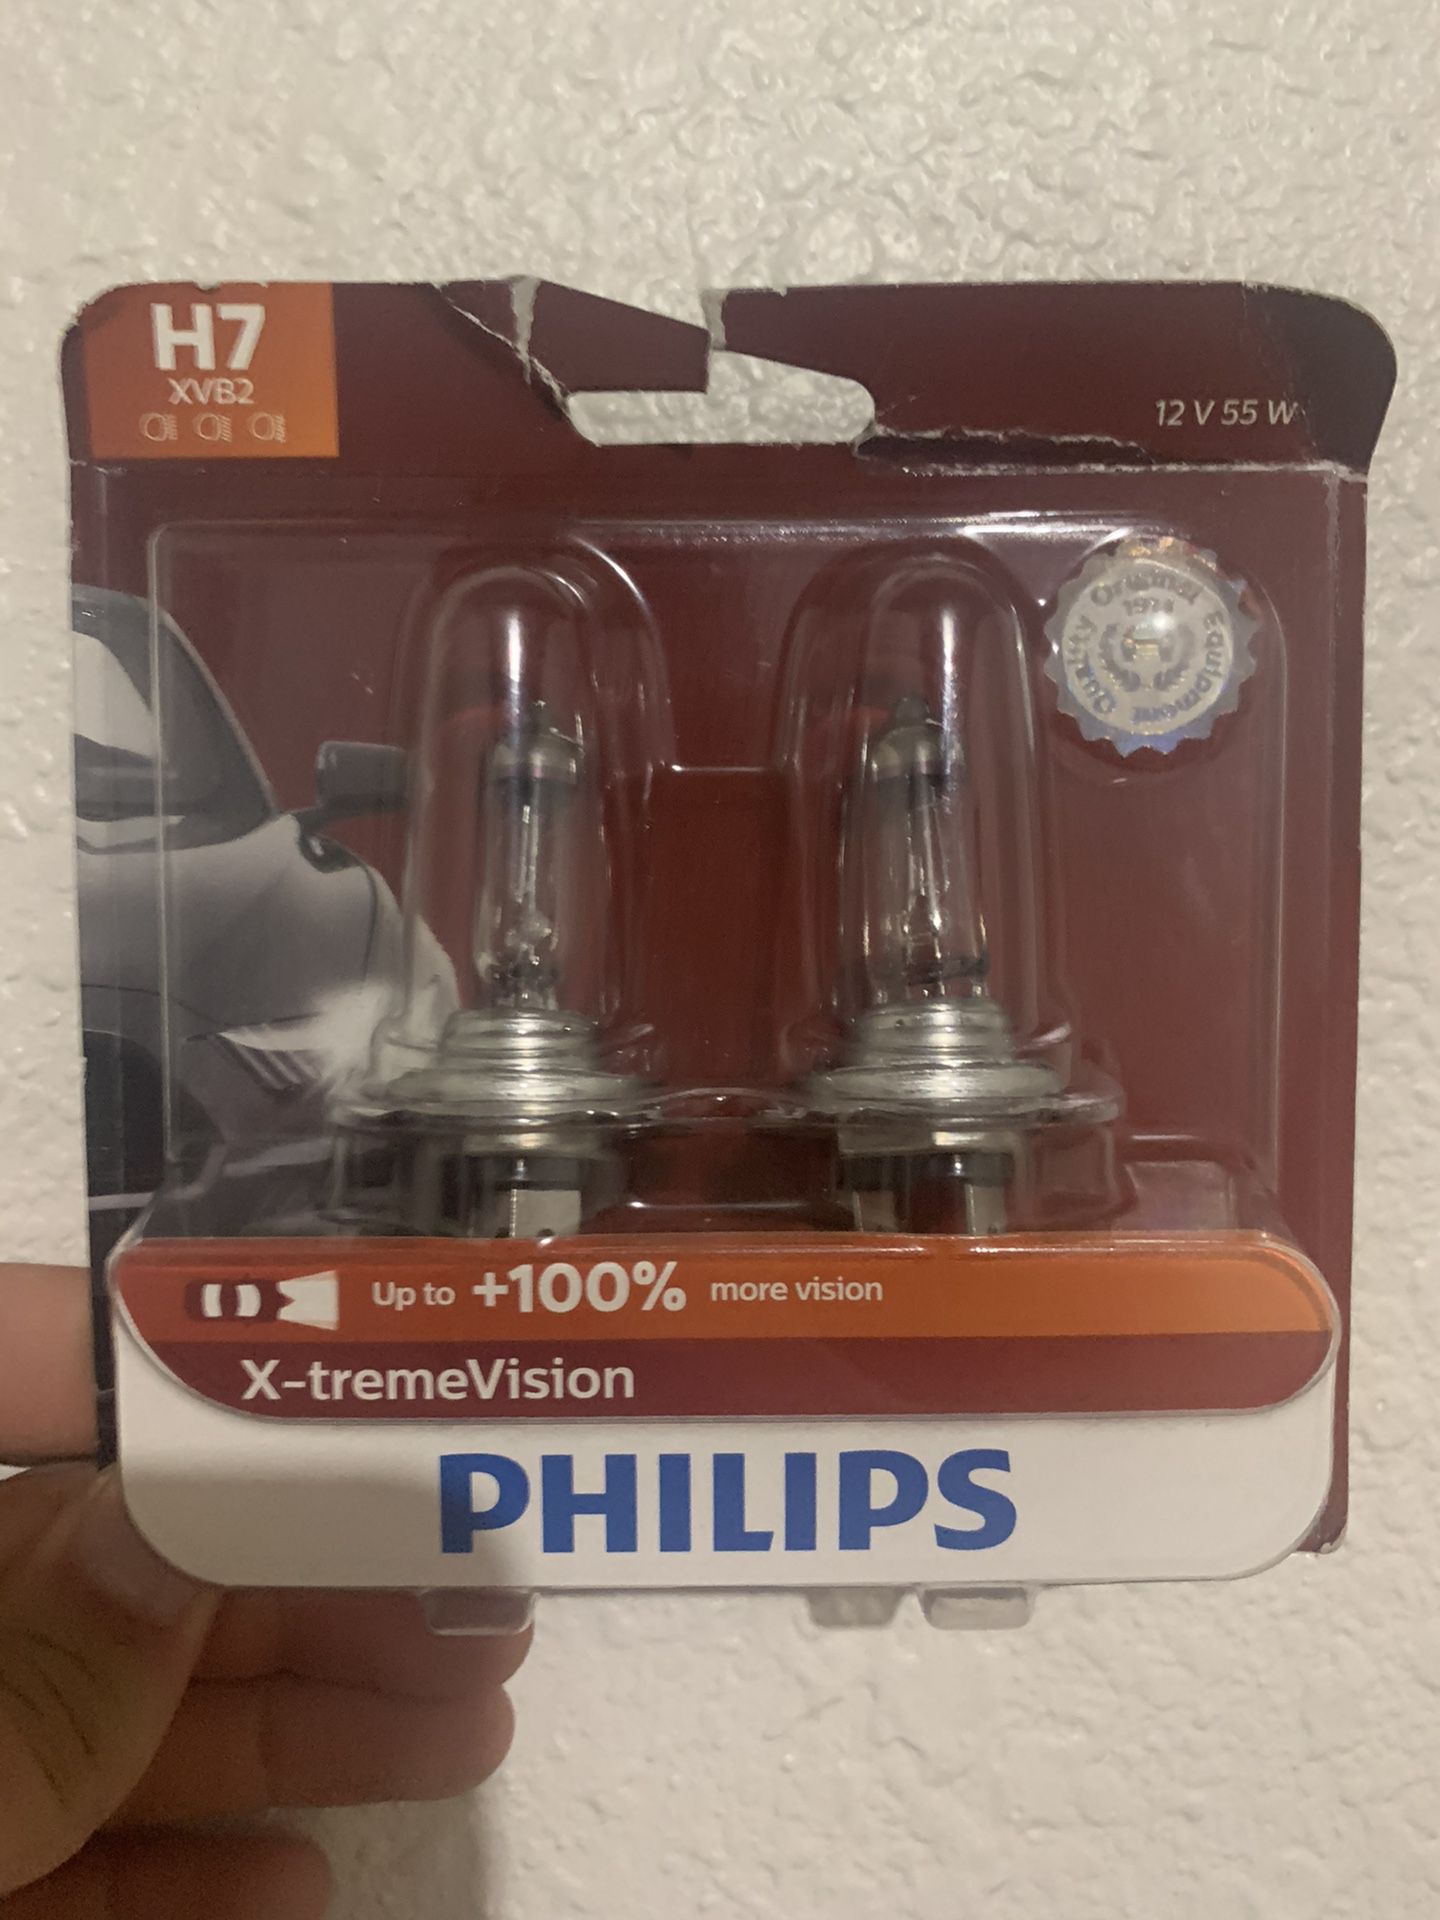 Philips h7 bulbs